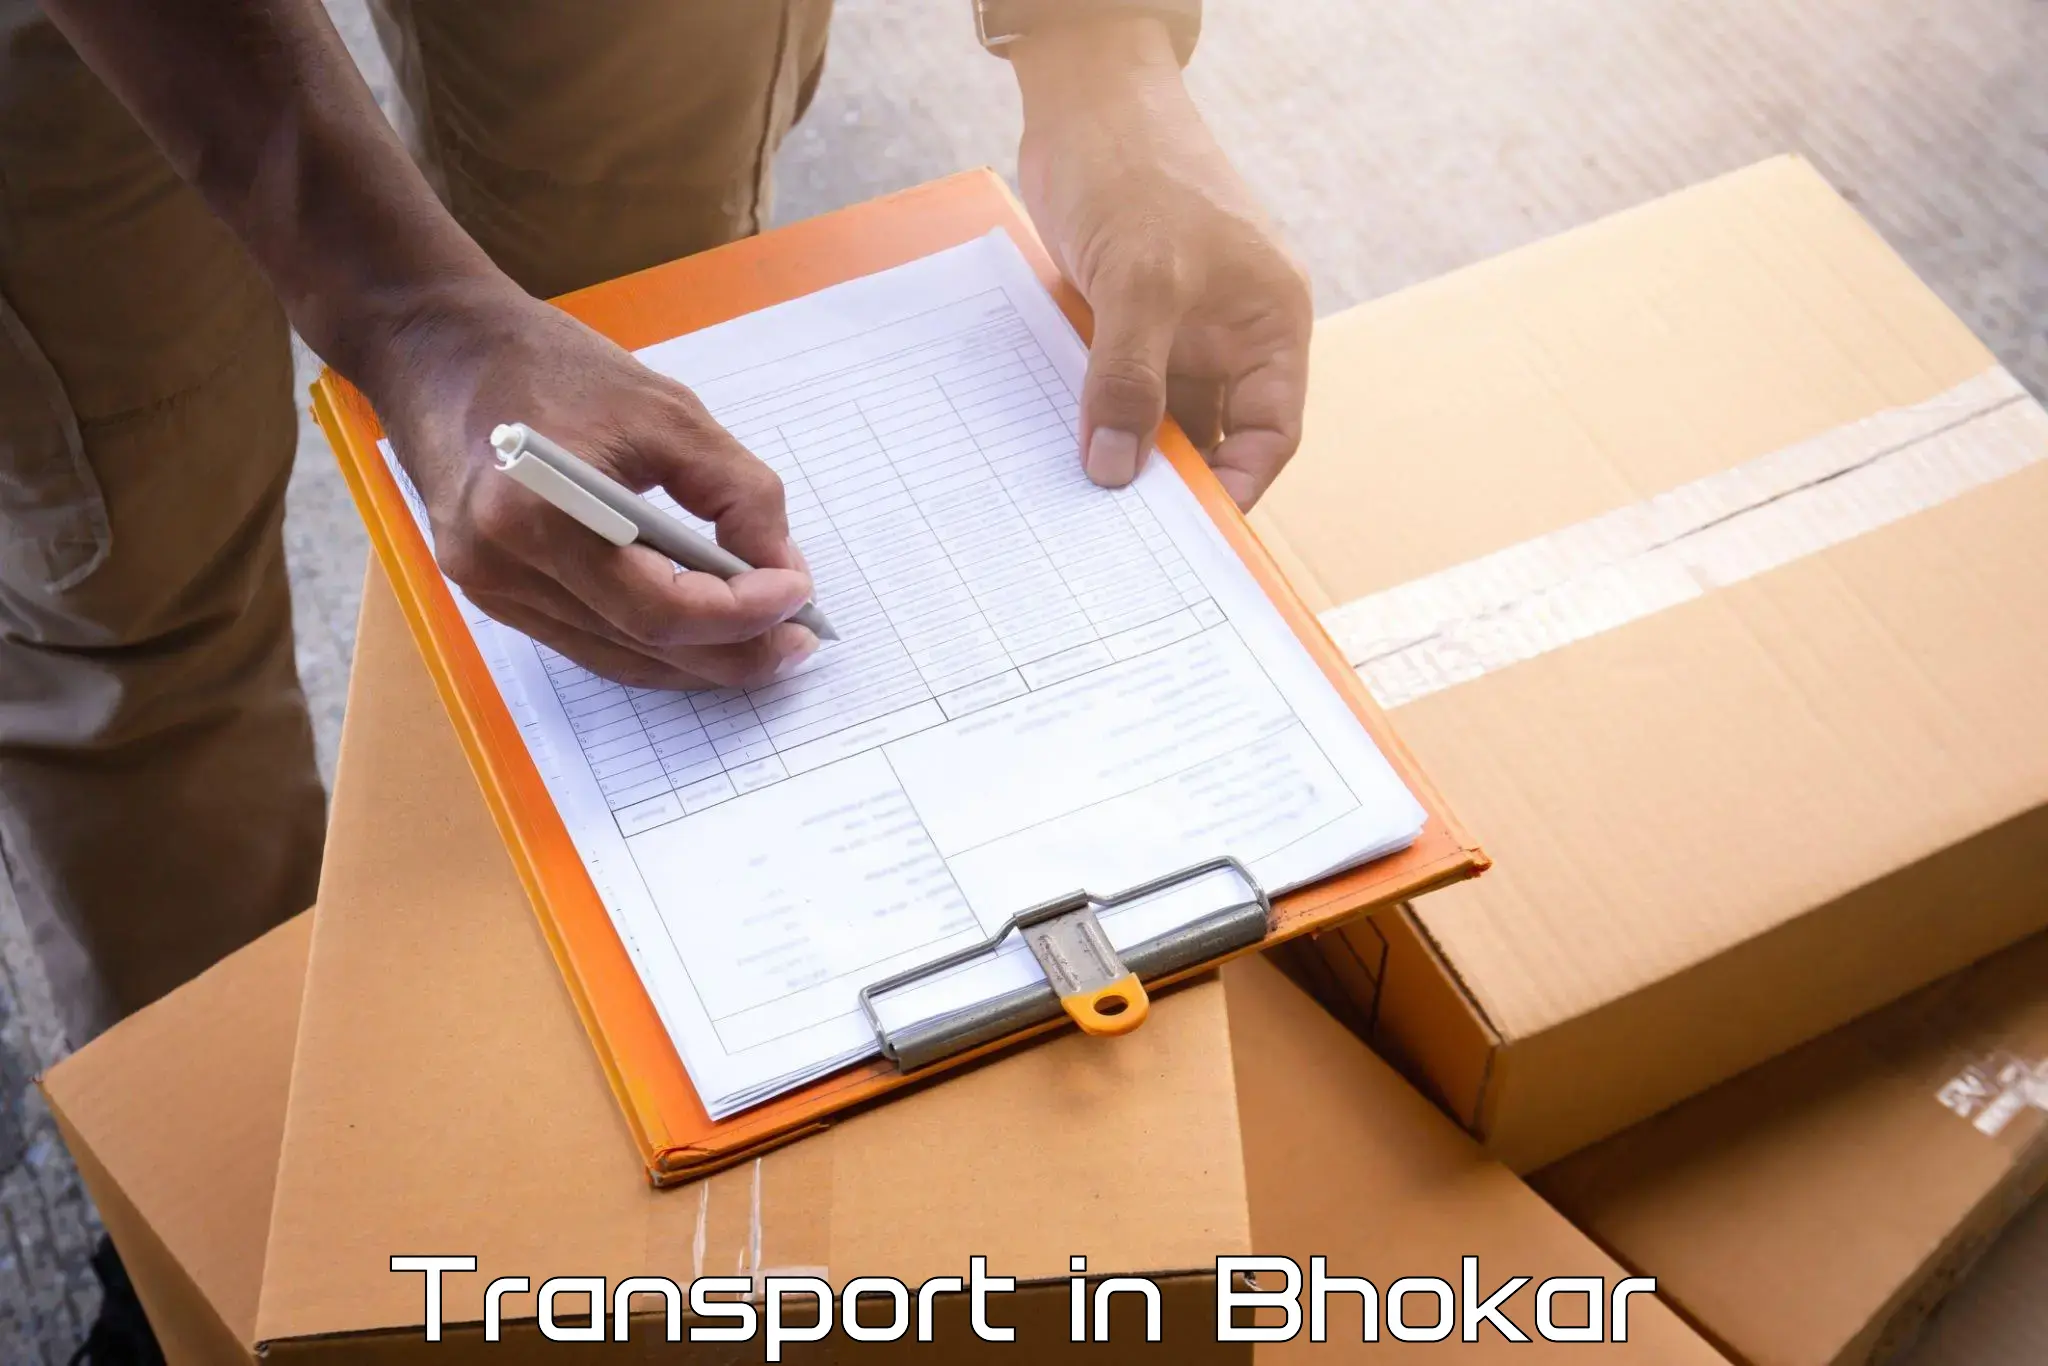 Daily parcel service transport in Bhokar